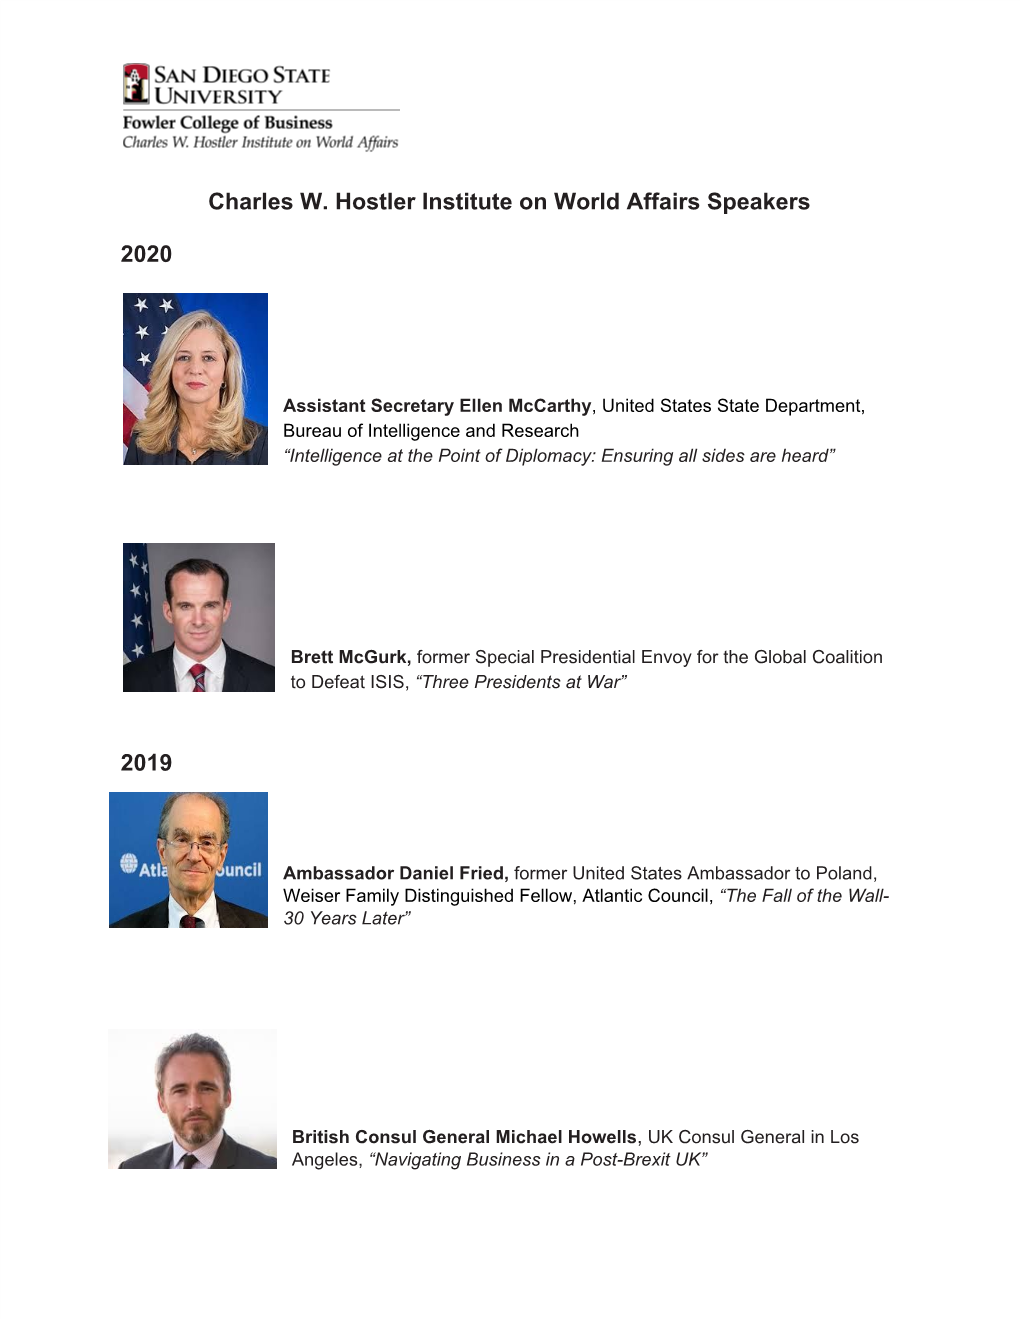 Charles W. Hostler Institute on World Affairs Speakers 2020 2019